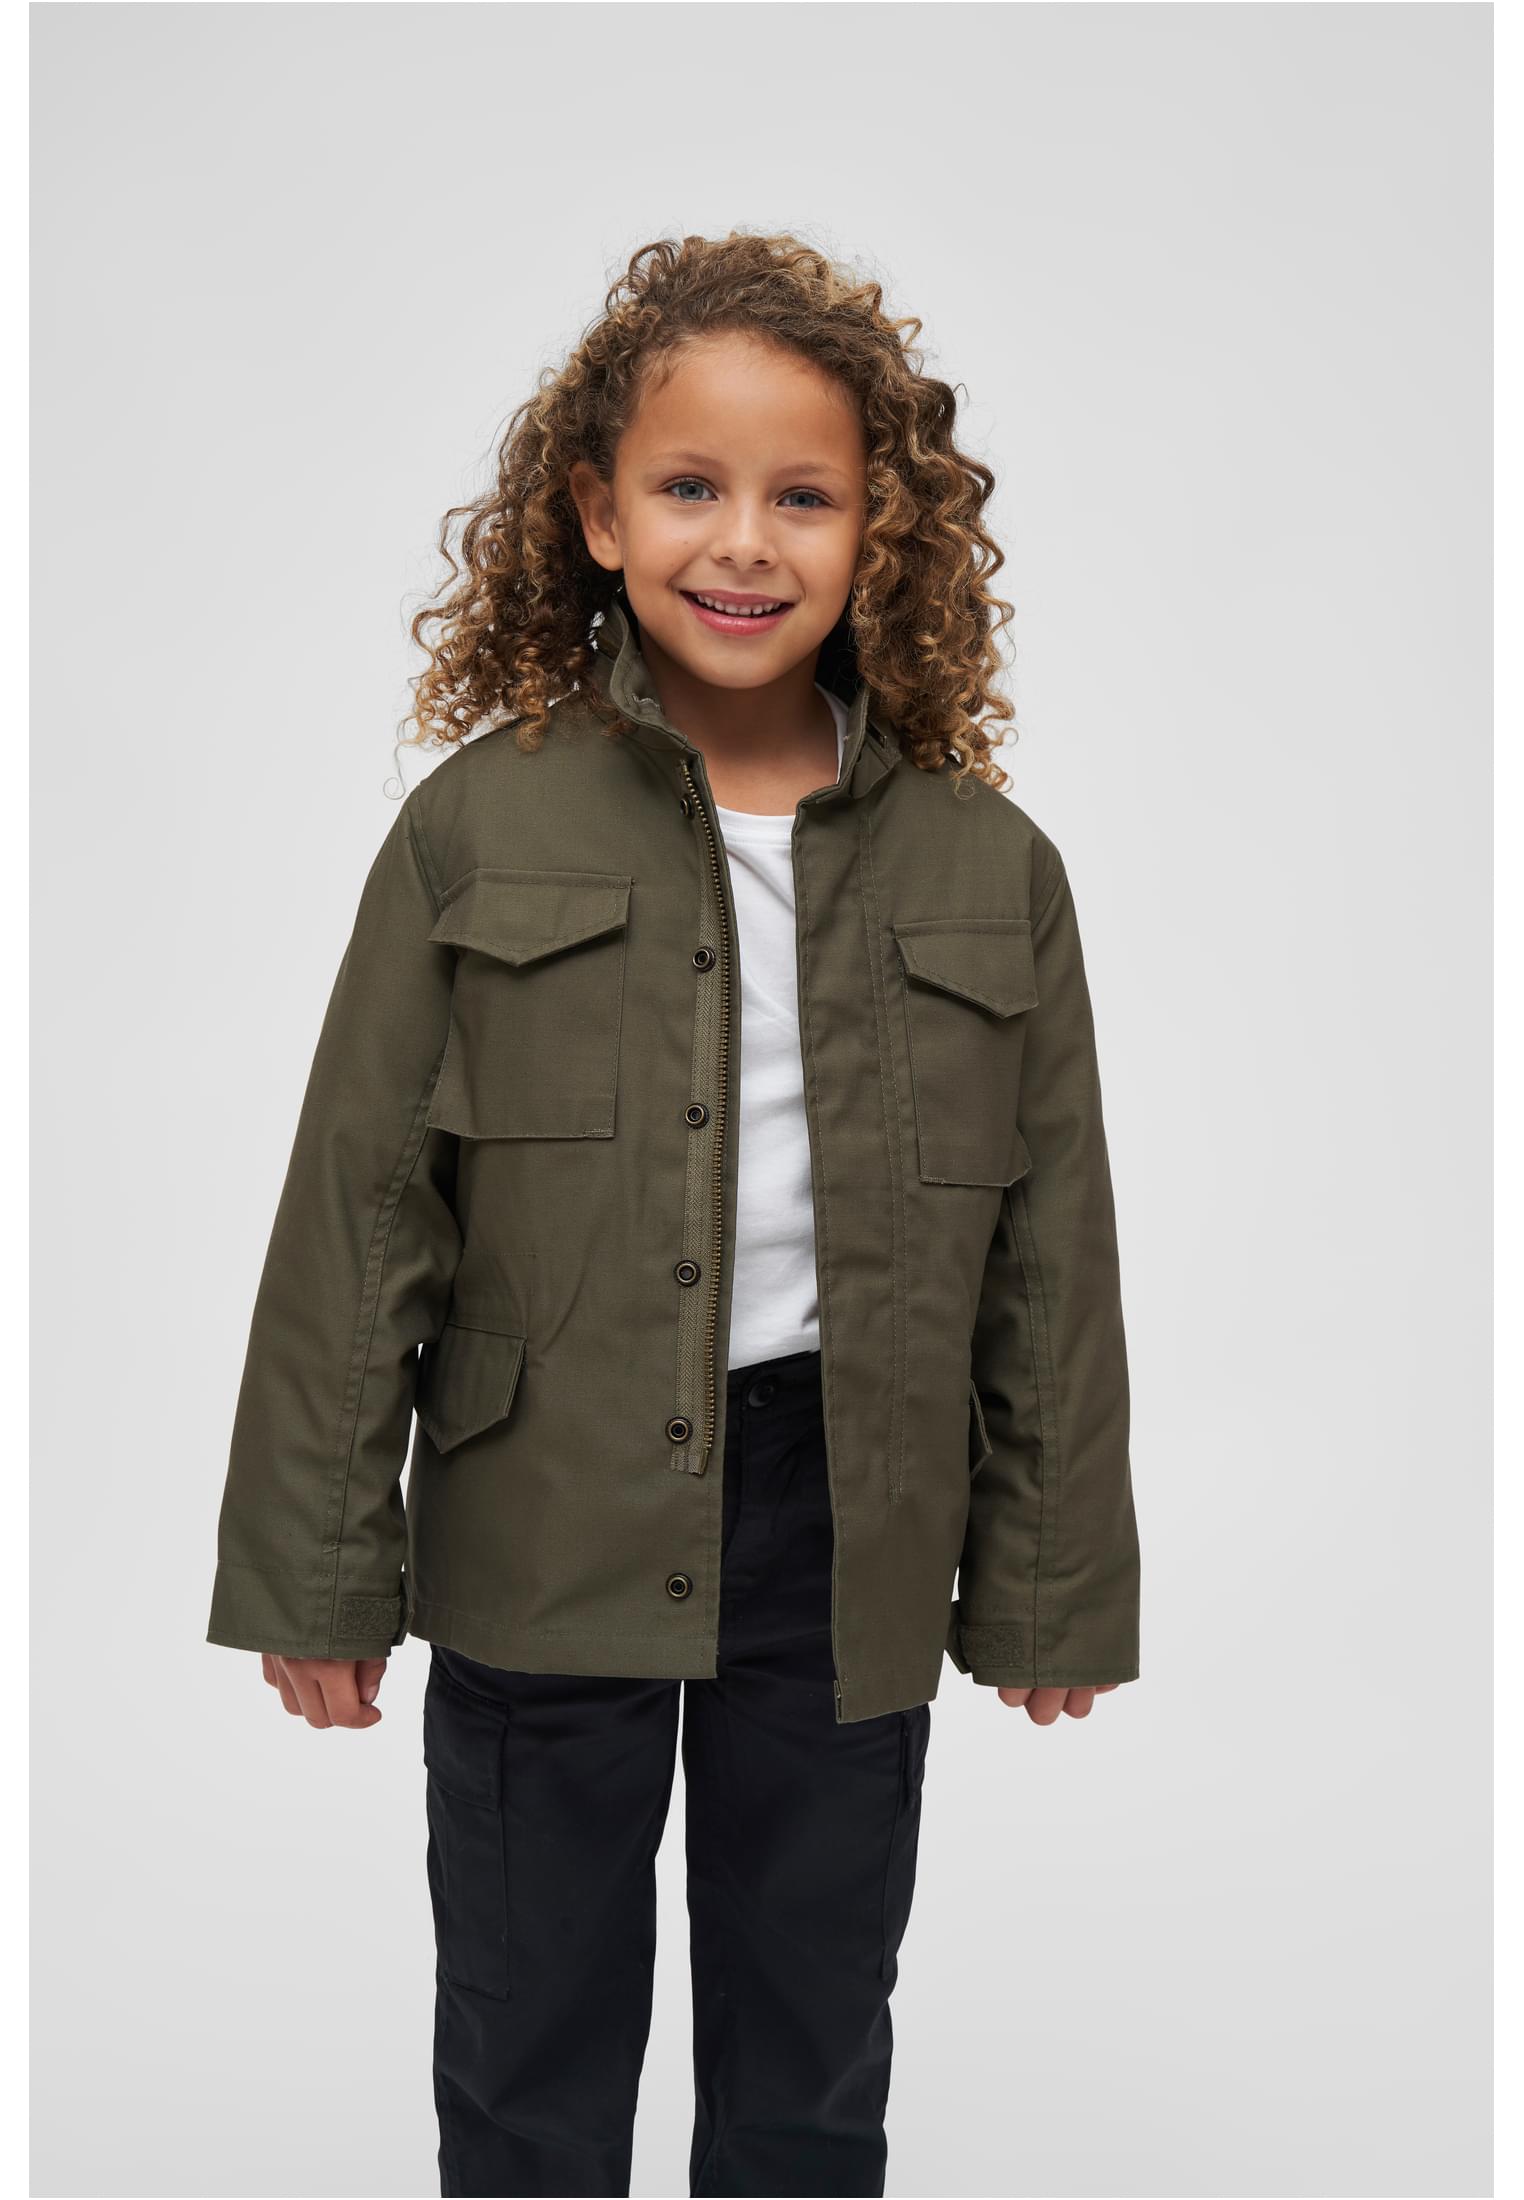 Brandit Kids M65 Standard Jacket